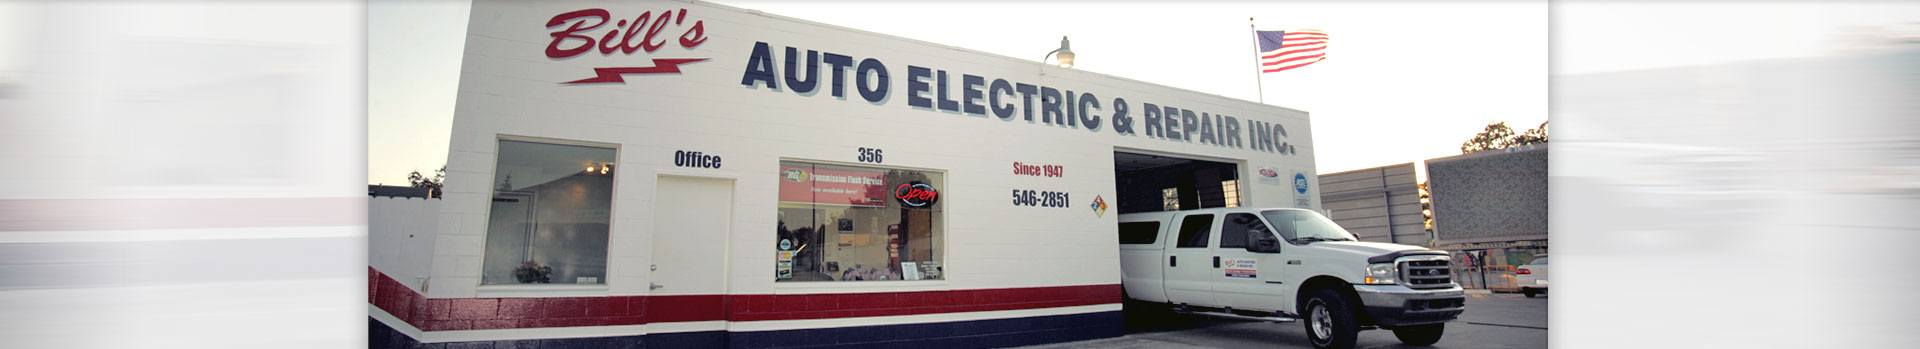 Santa Rosa Auto Repair - Bill's Auto Electric & Repair, Inc.